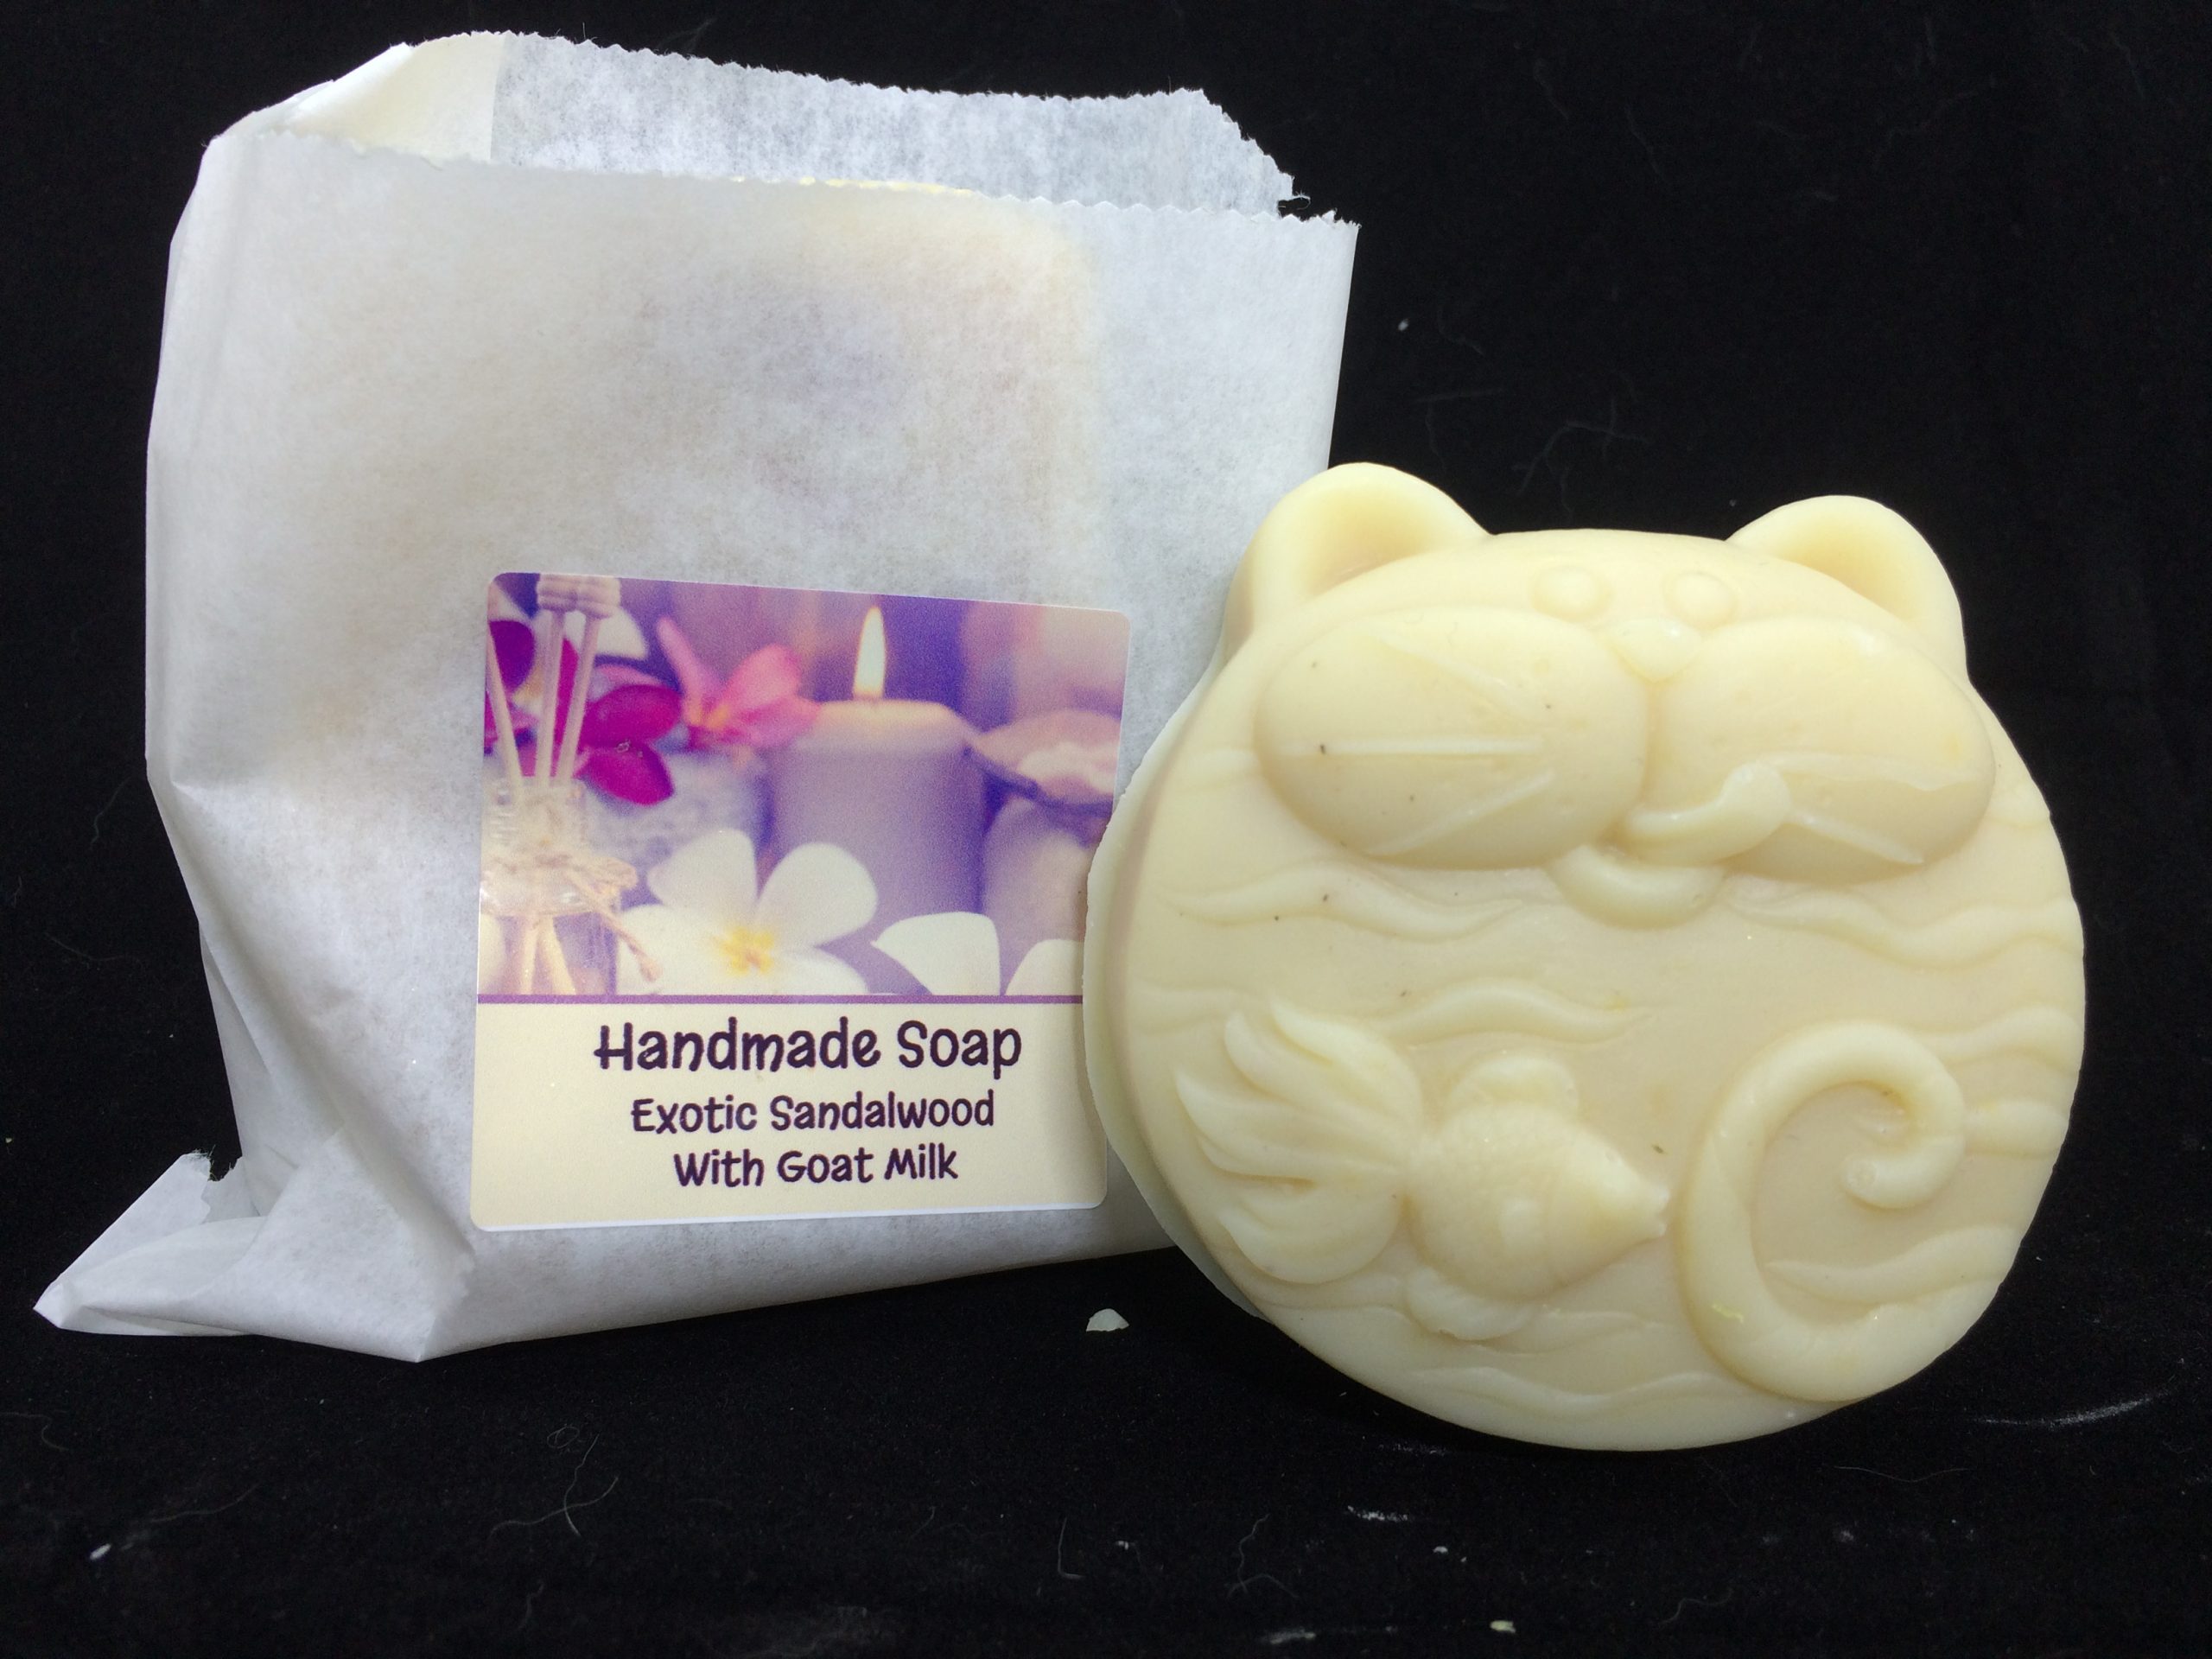 Sandalwood handmade soap with goat milk cat mold